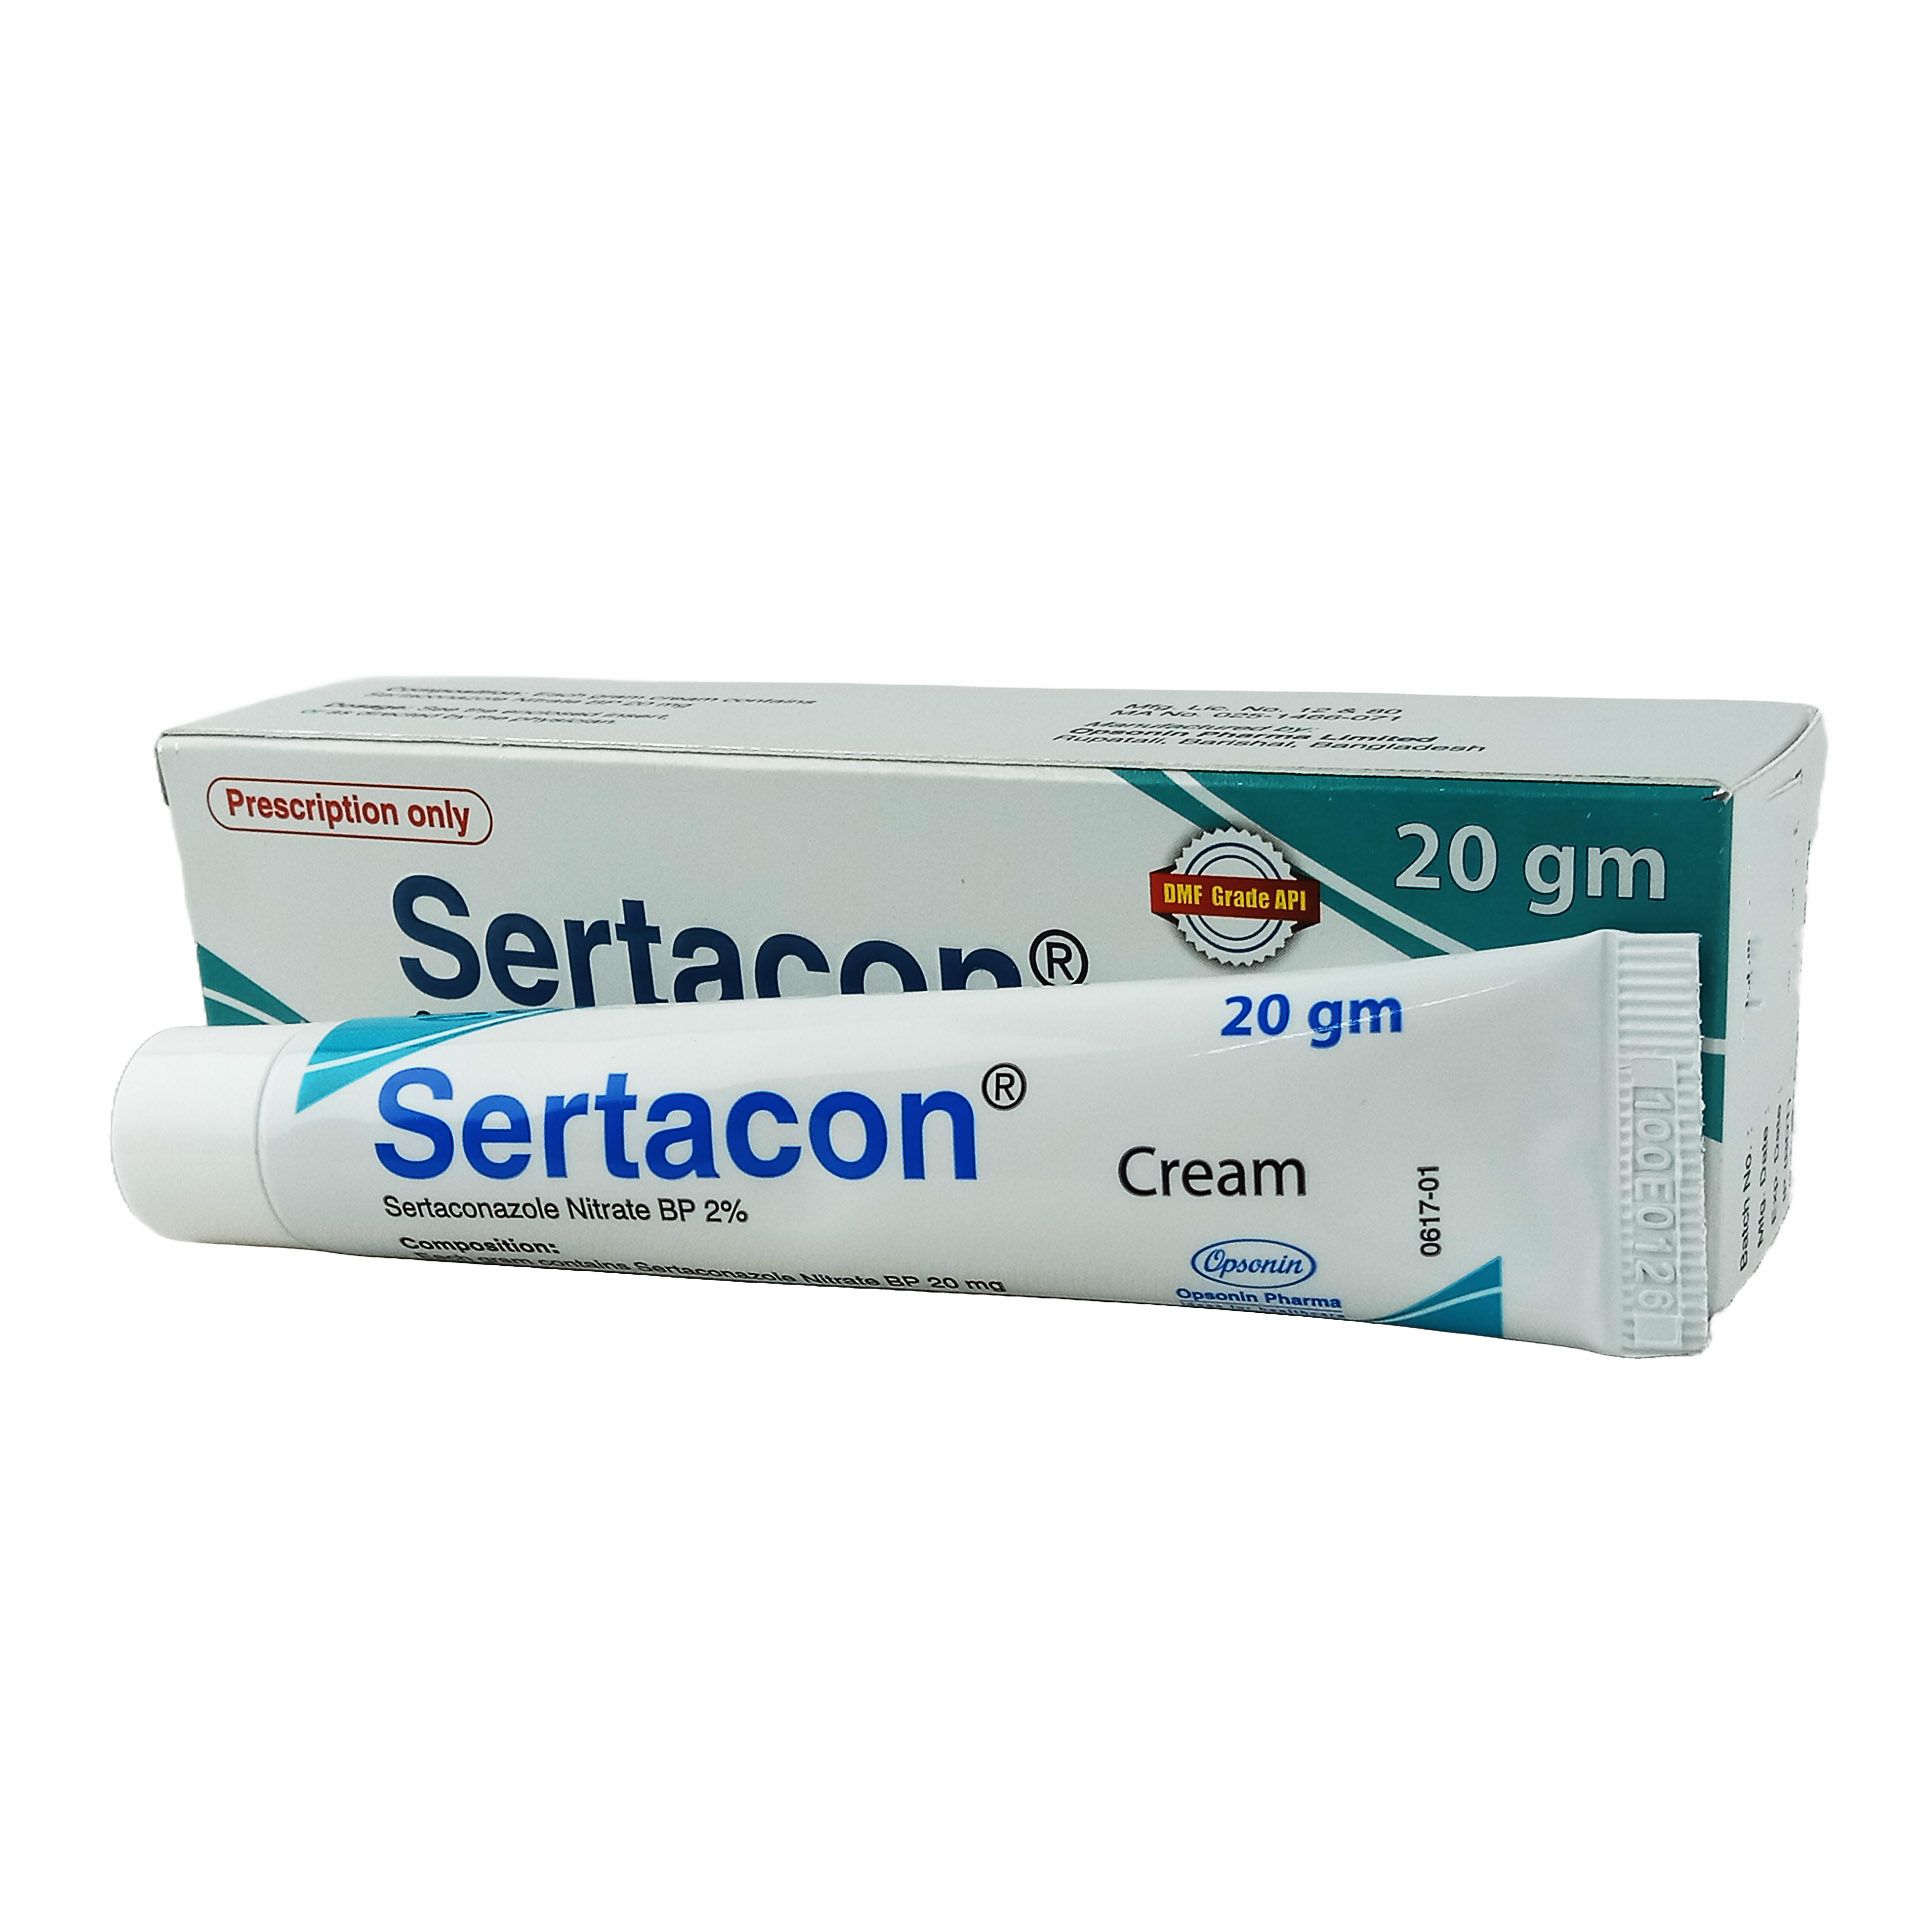 Sertacon 2gm/100gm Cream